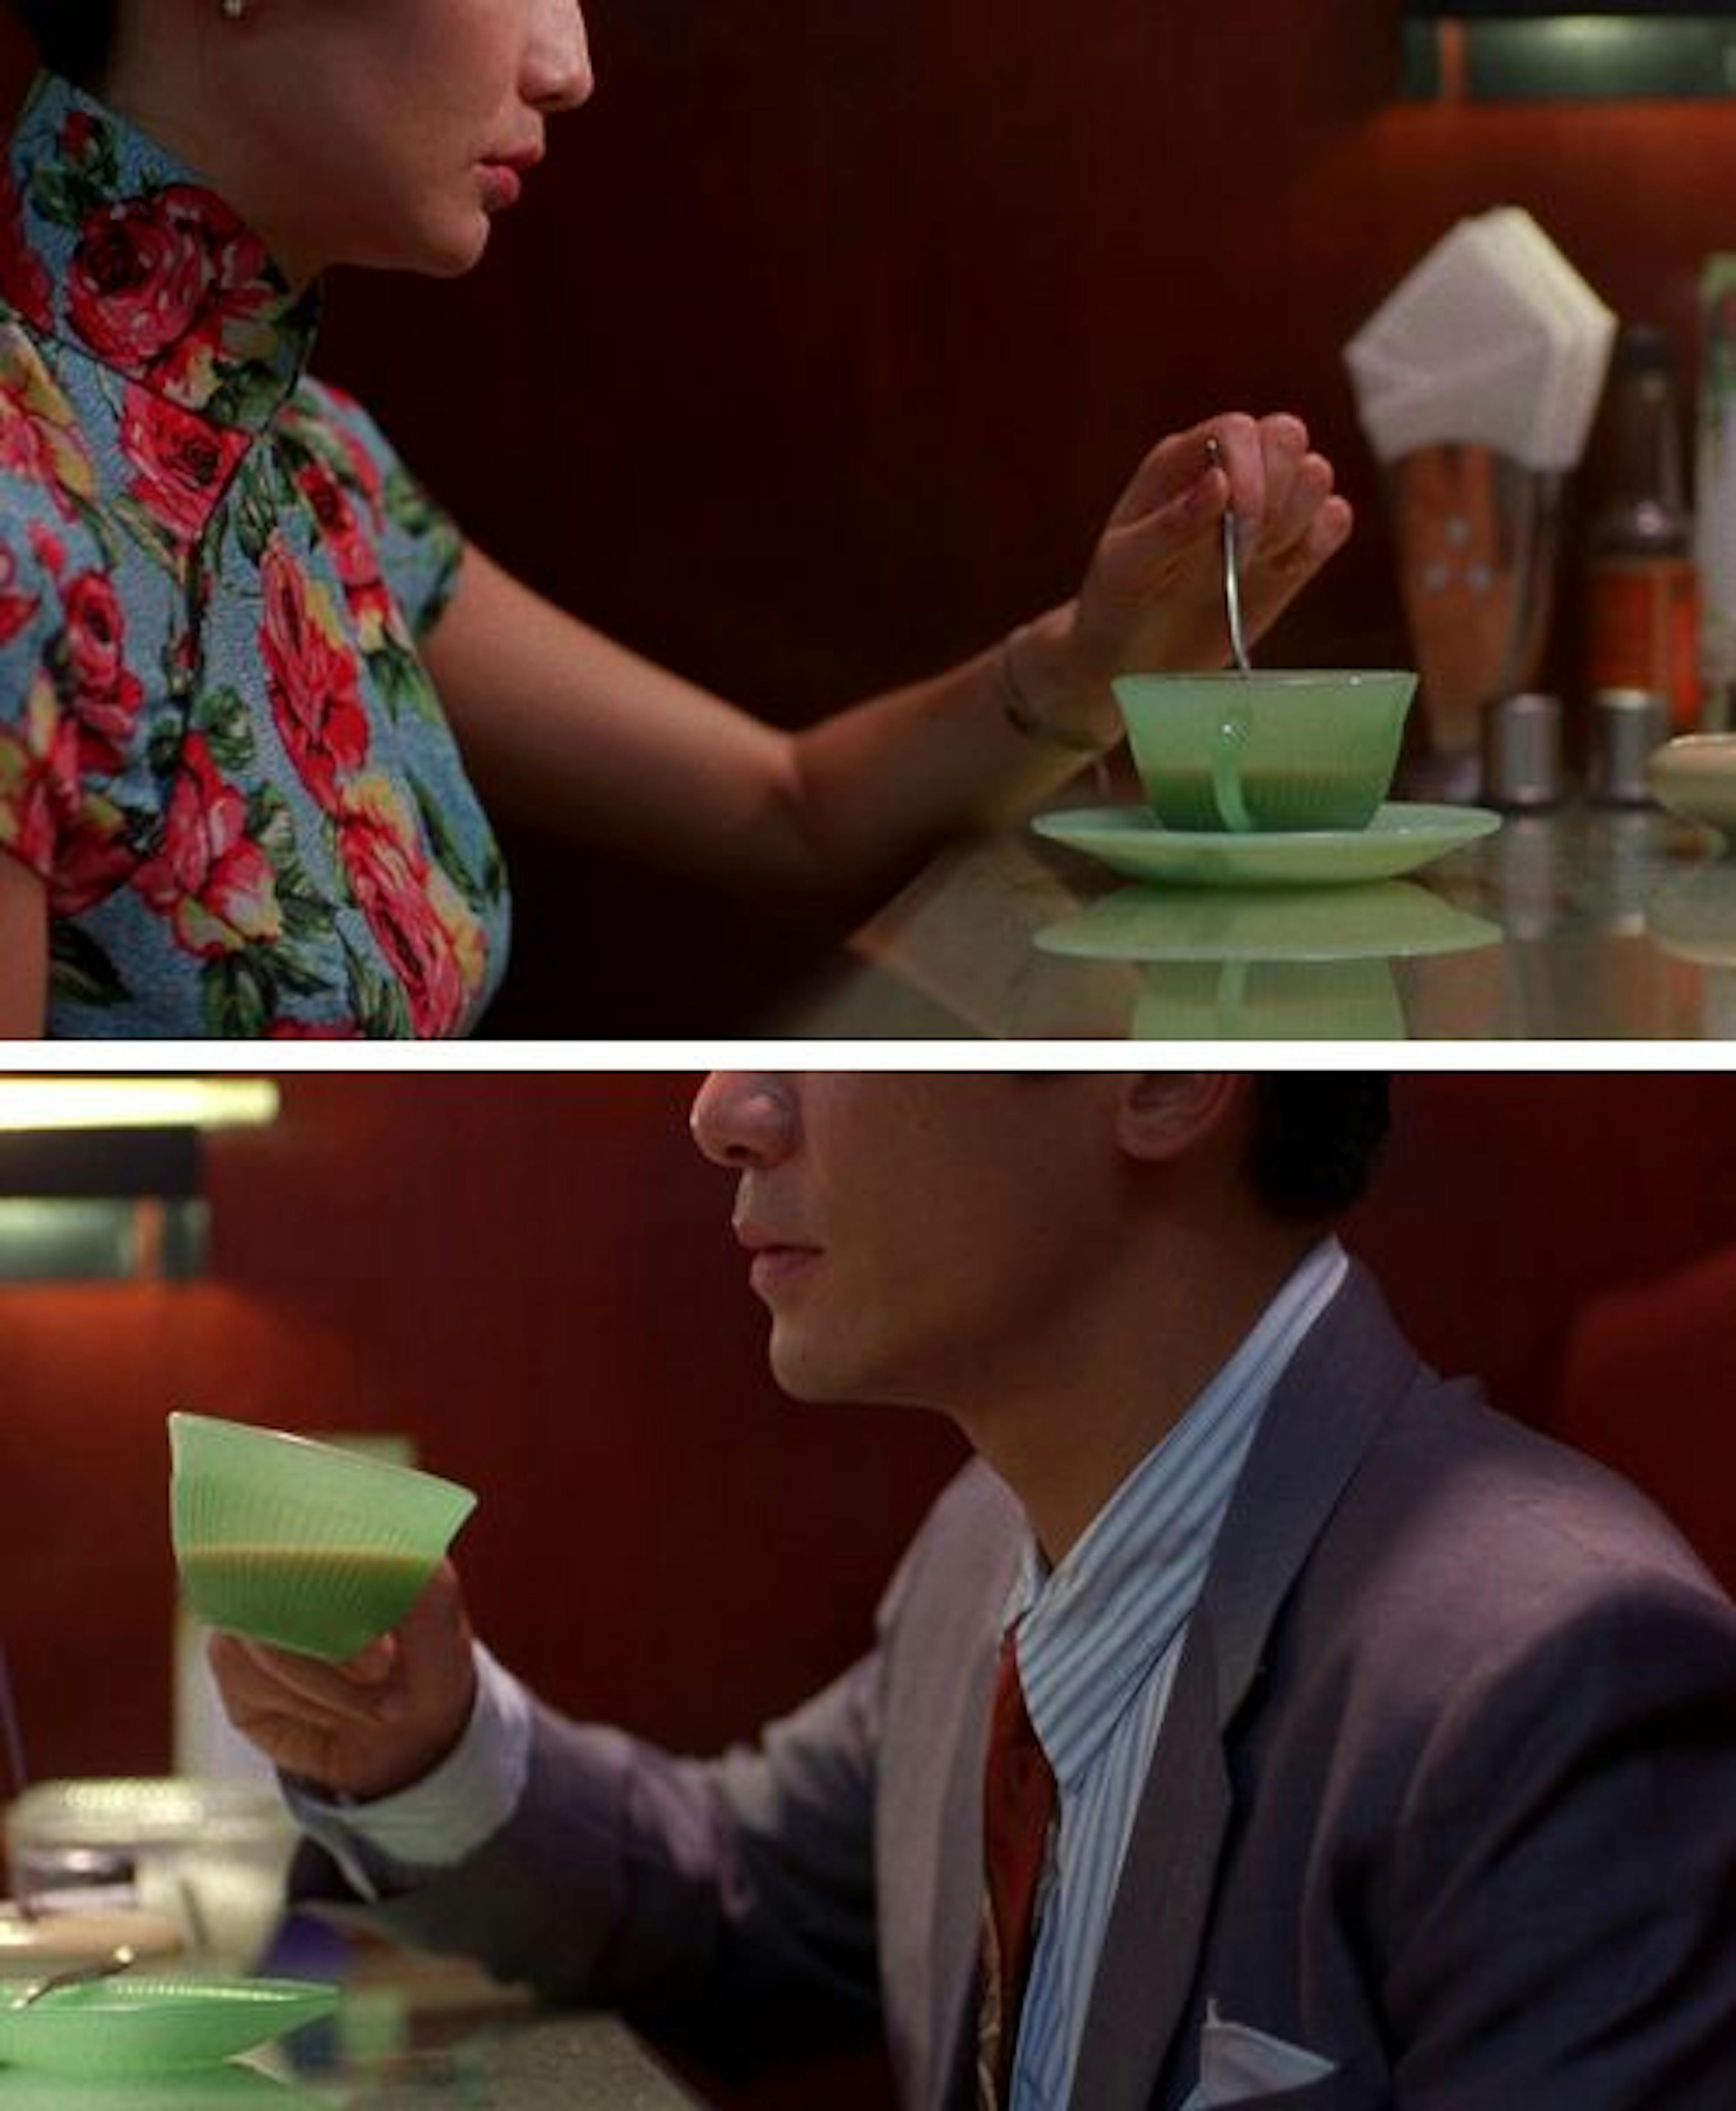 Tasses opalines Fireking vu dans le film In the Mood for Love de Wong Kar-Wai 